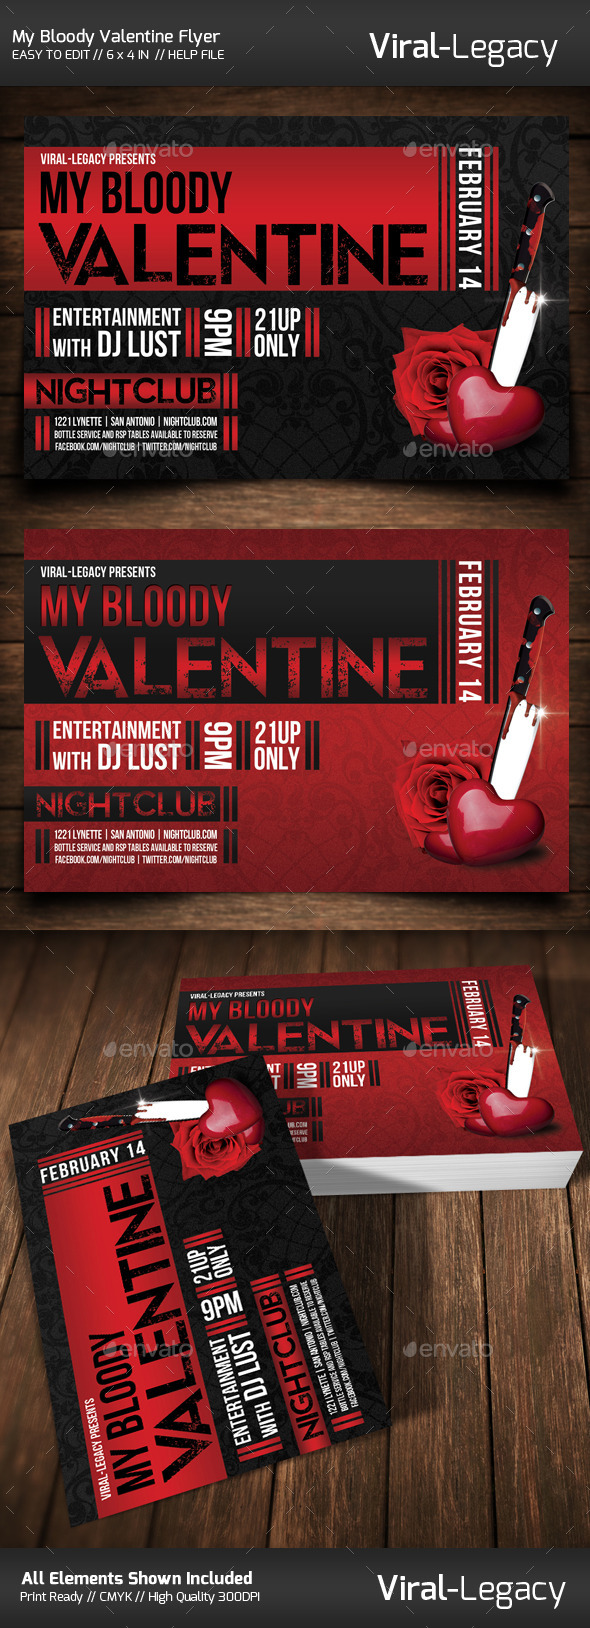 My Bloody Valentine Flyer